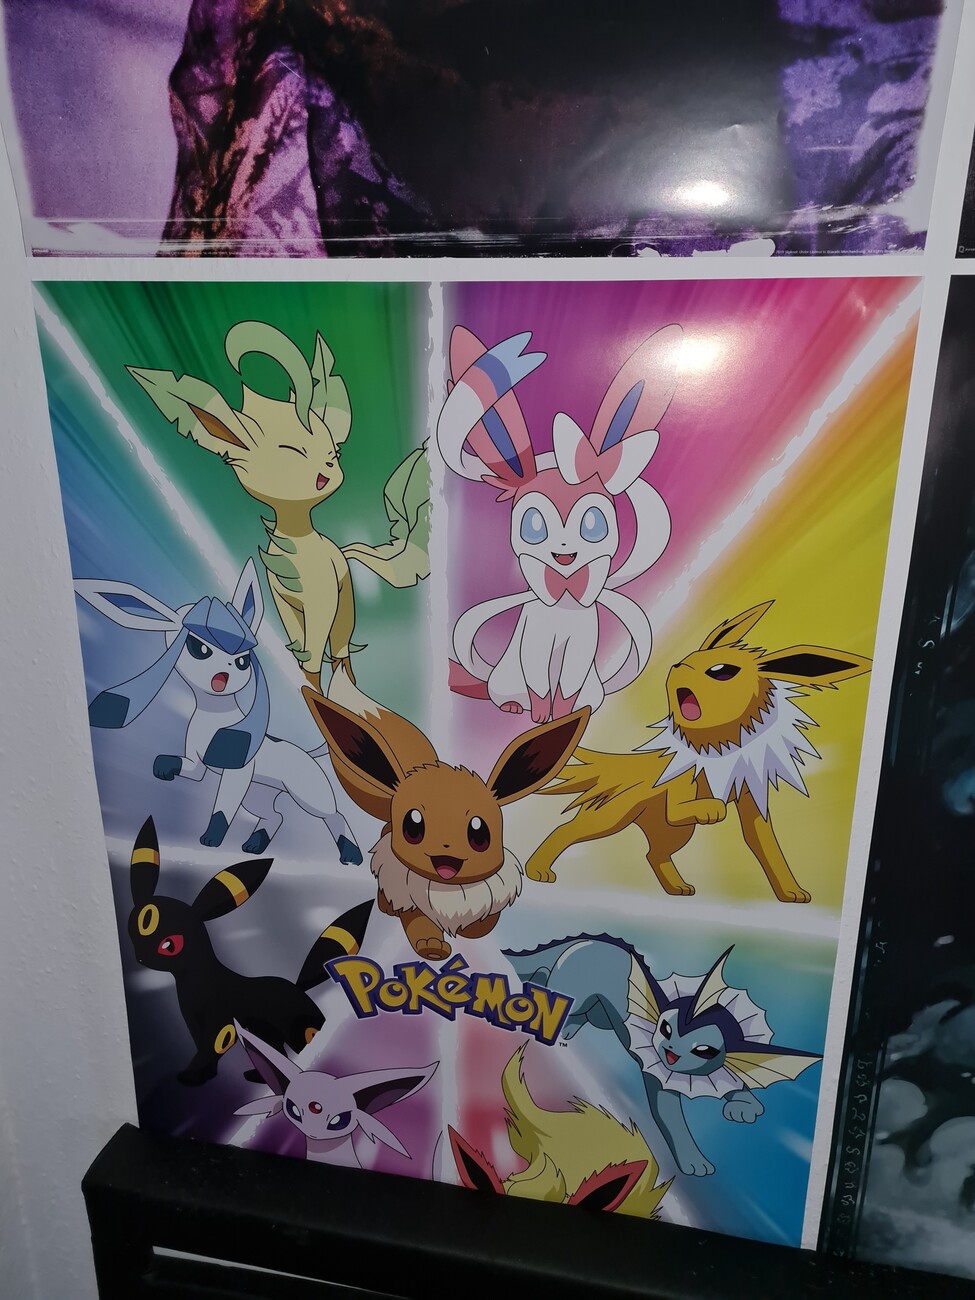 Poster Pokémon - Eevee Evolutions, Wall Art, Gifts & Merchandise